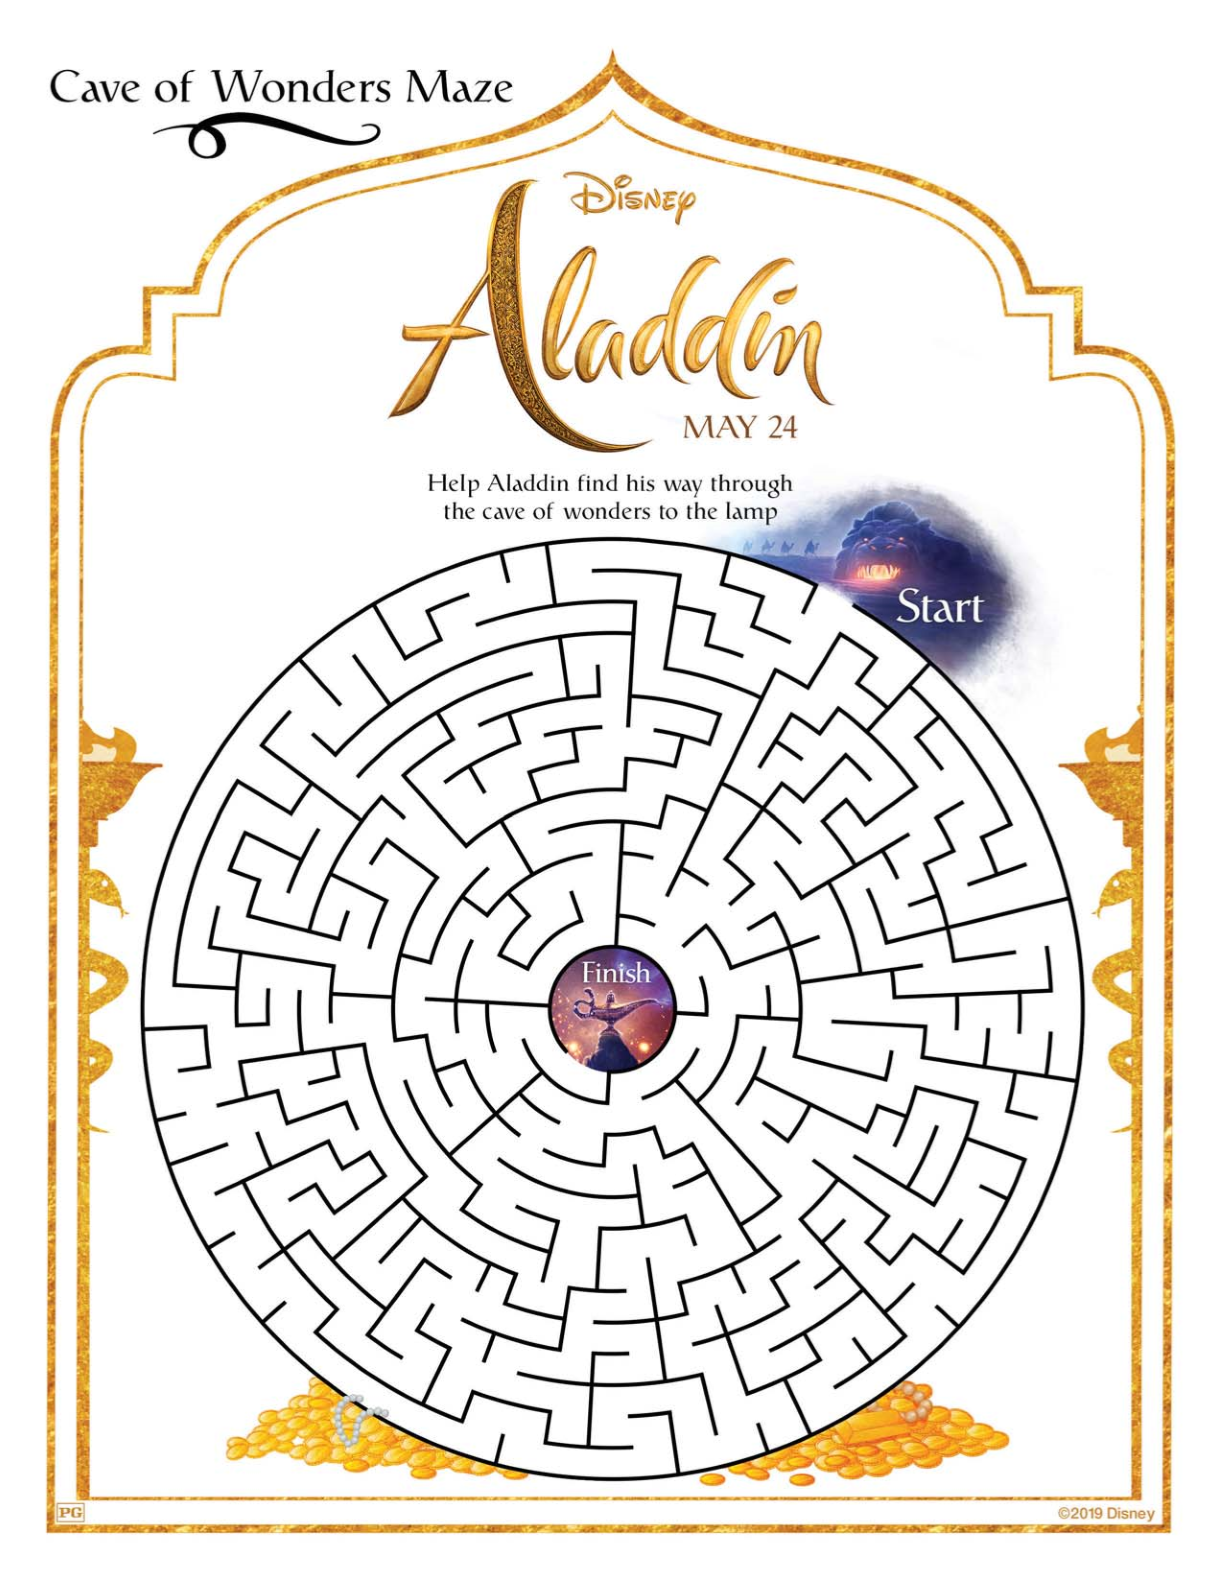 Free Printable Disney Aladdin Cave Maze Activity Page #maze #printablemaze #aladdin #aladdin2019 #freeprintable #disney 